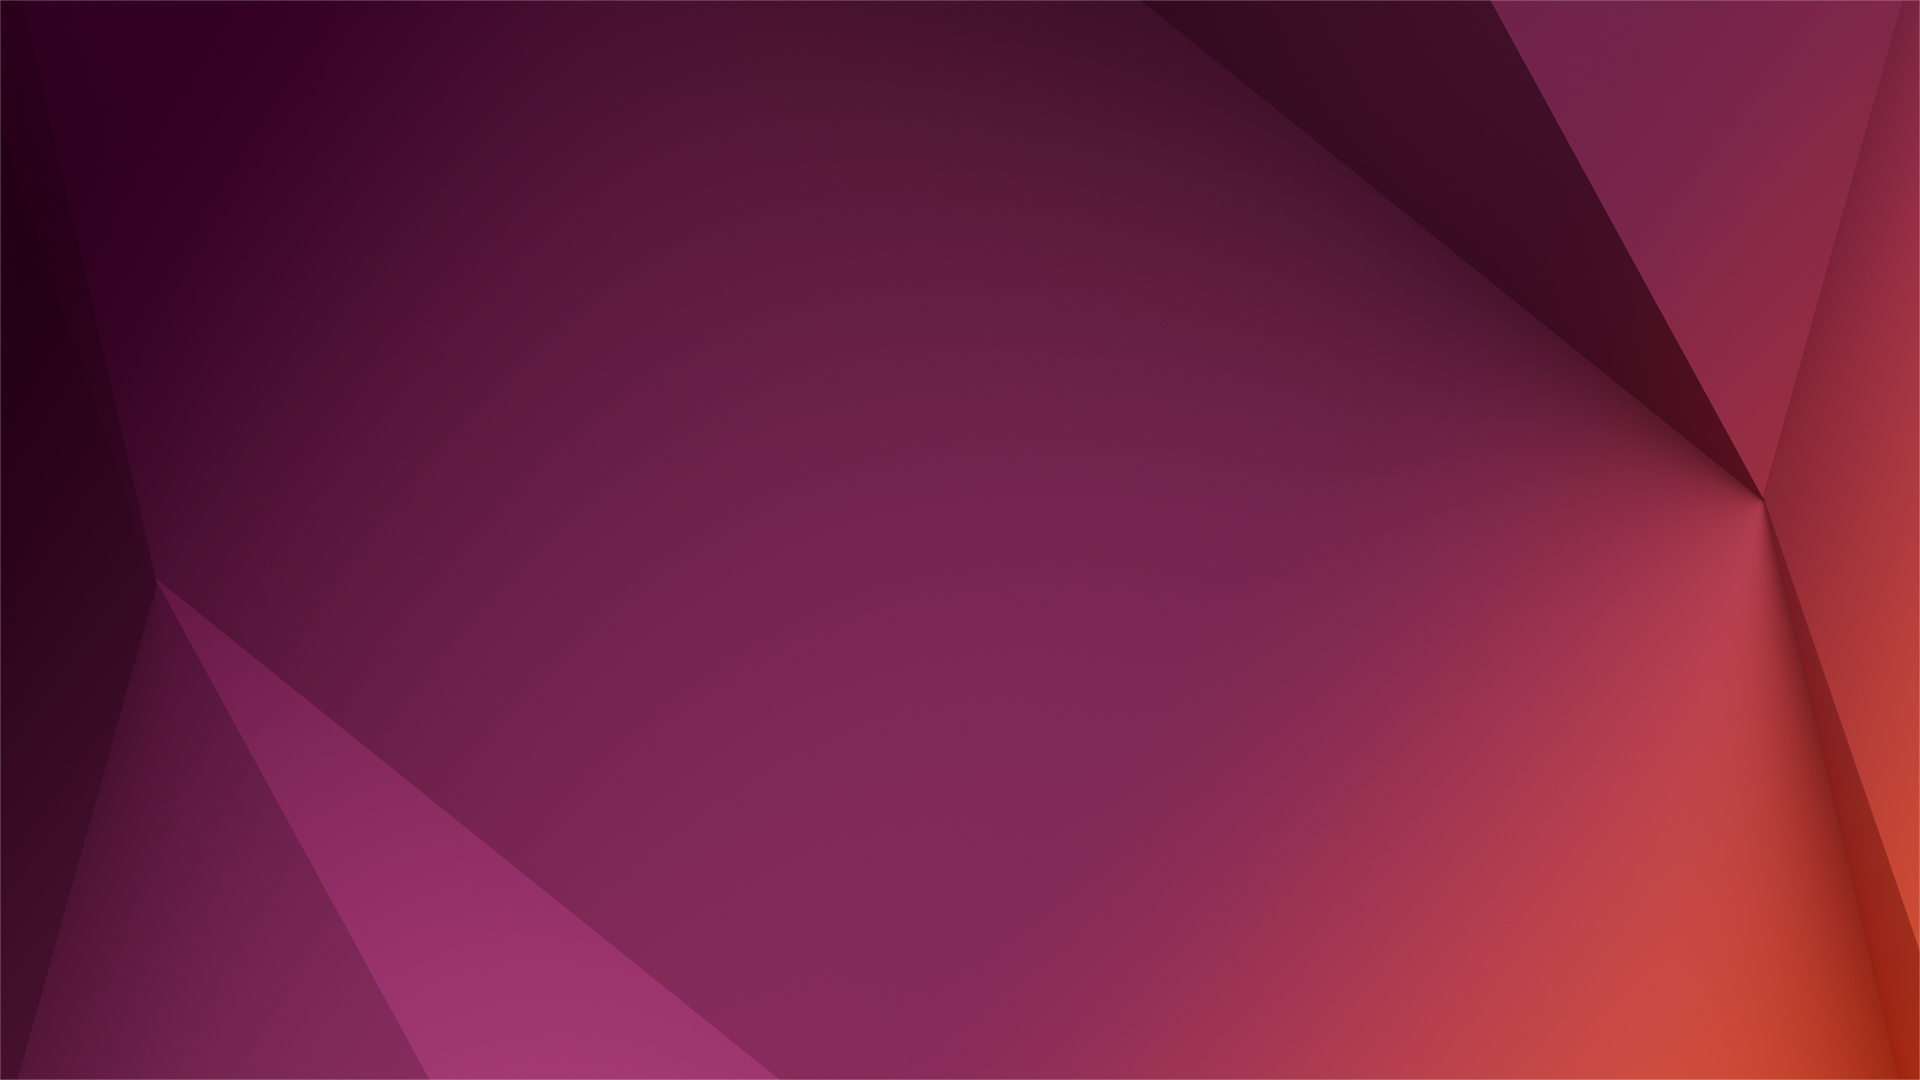 General 1920x1080 Ubuntu abstract digital art minimalism simple background gradient colorful